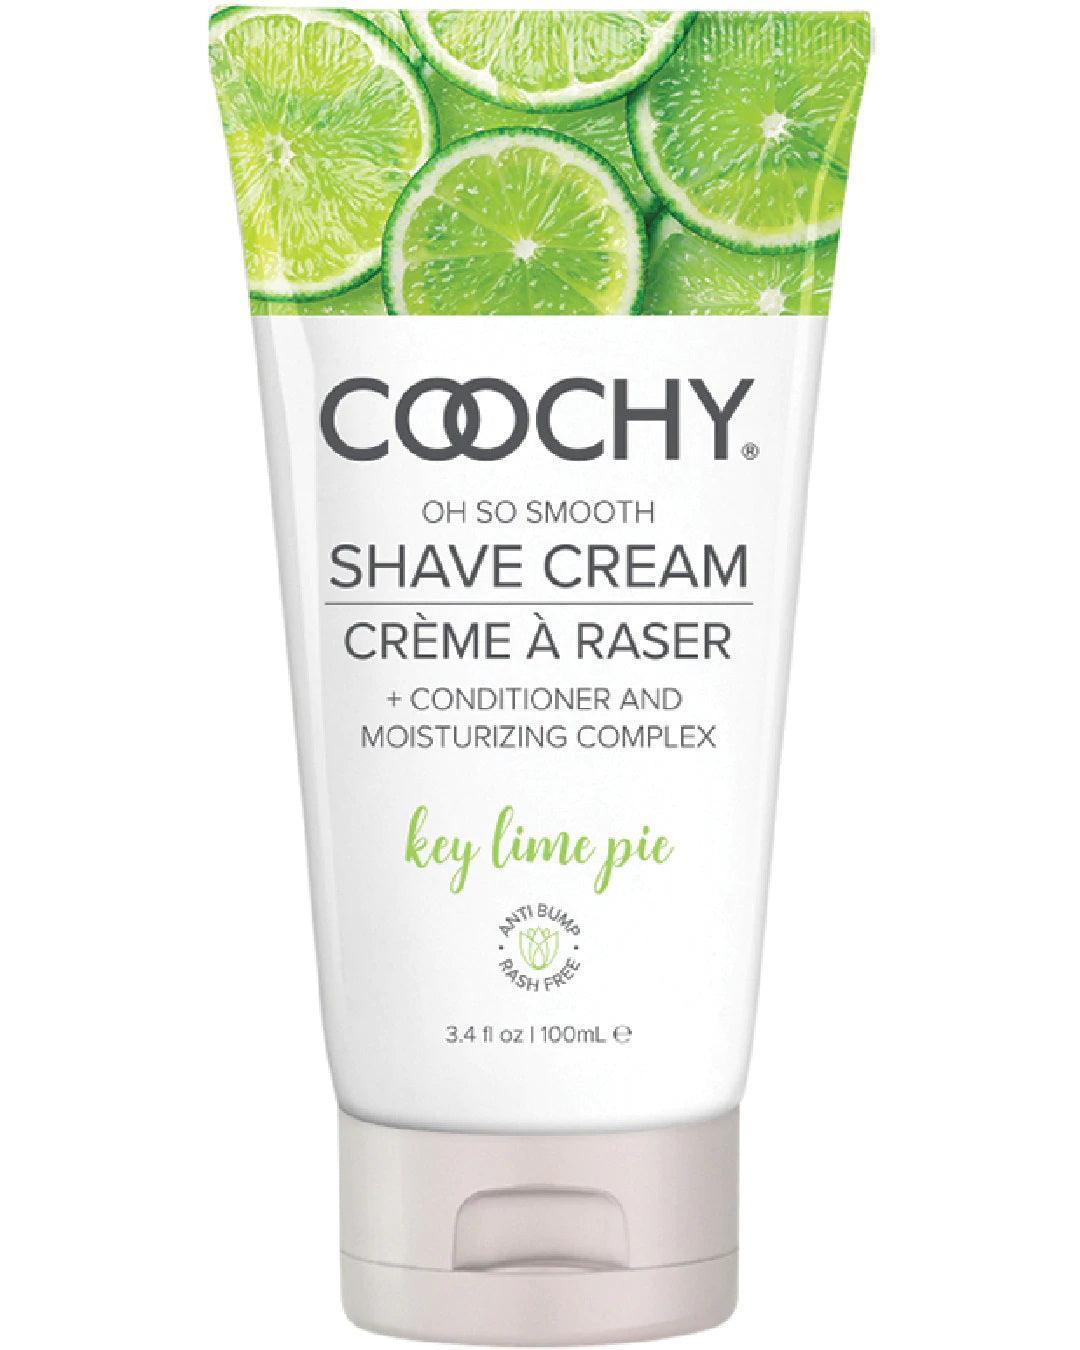 Coochy Shave Cream - Key Lime Pie - 3.4 Oz - My Sex Toy Hub